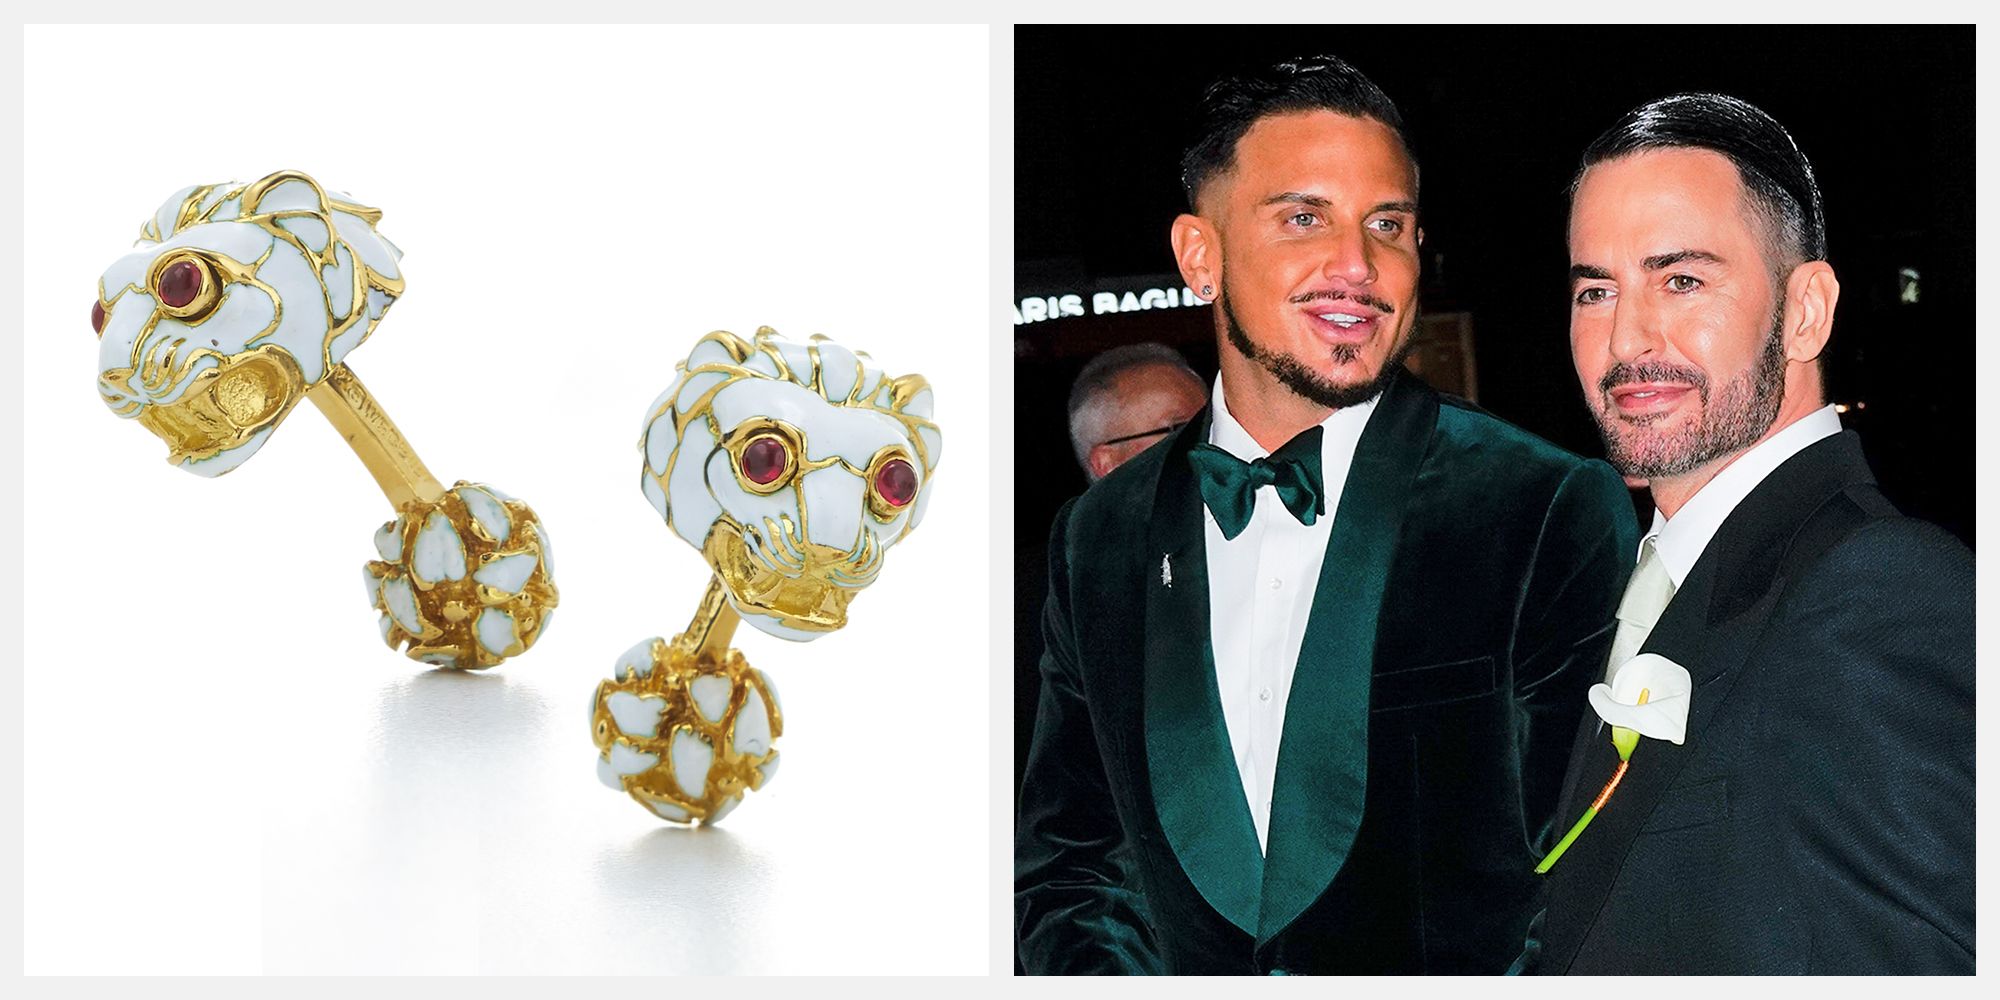 Marc Jacobs' Wedding Cufflinks Were A True Men's Jewelry Moment